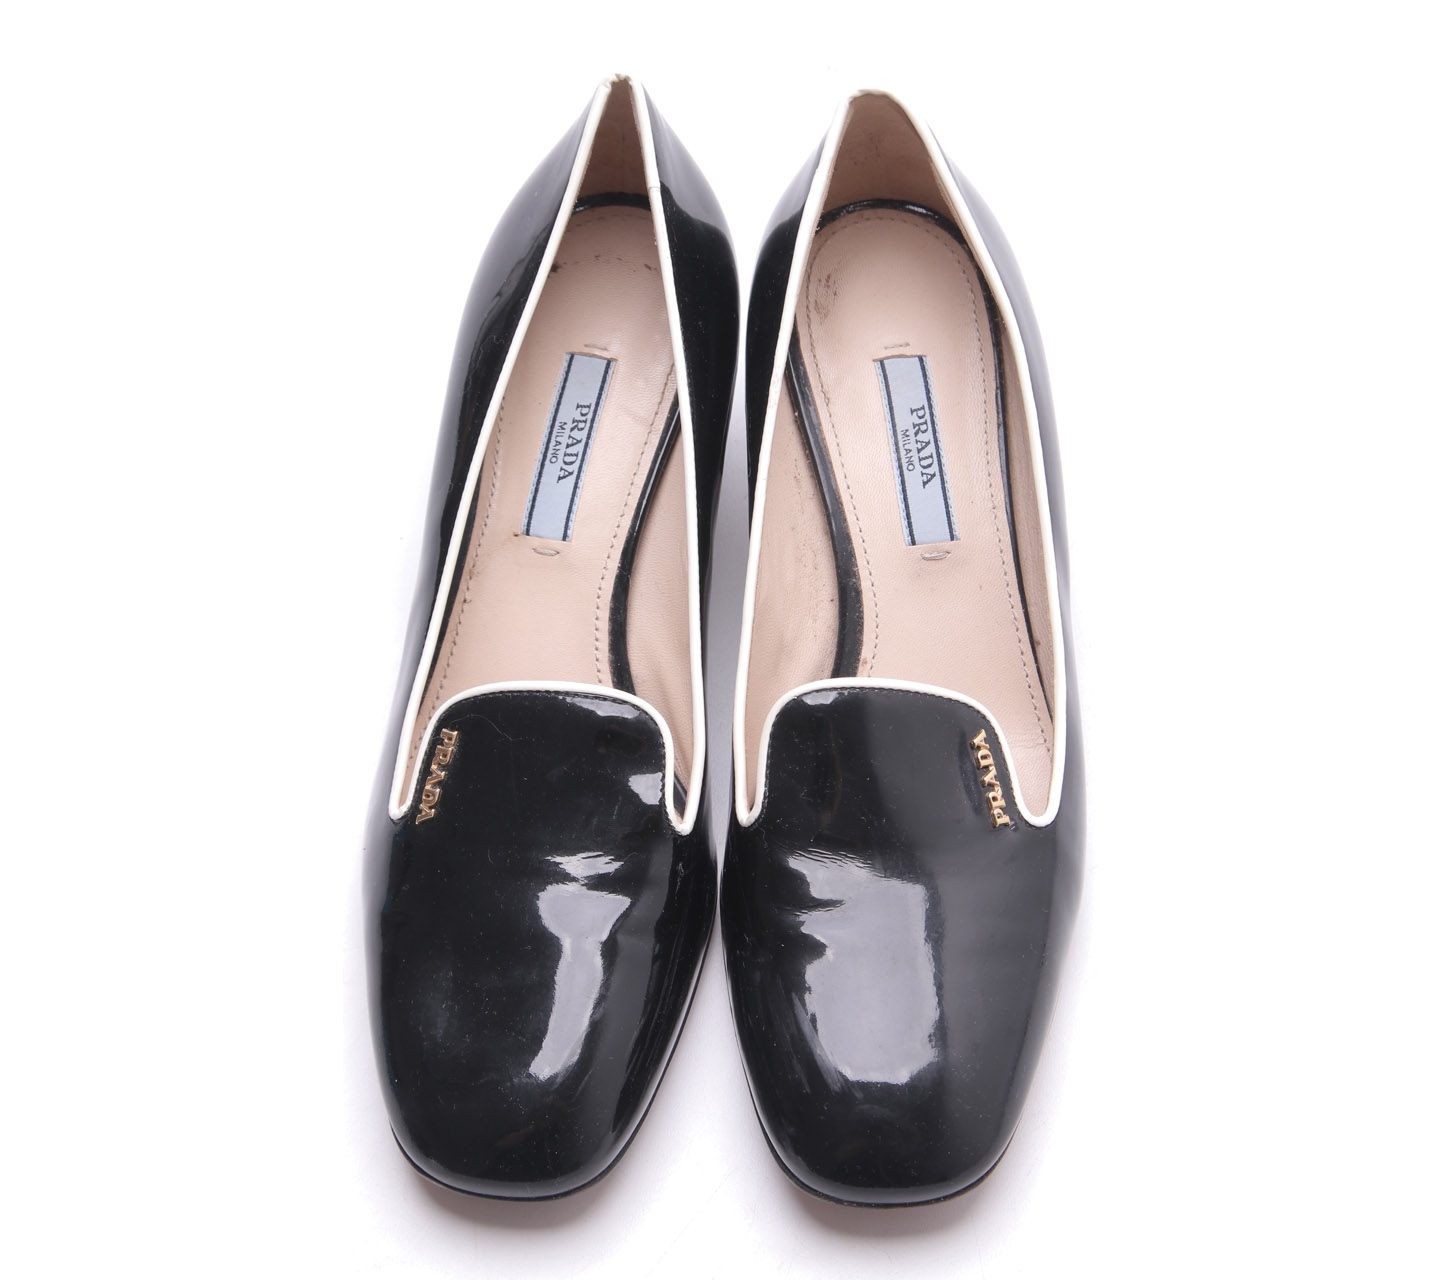 Prada Black Patent Leather Loafers Heels